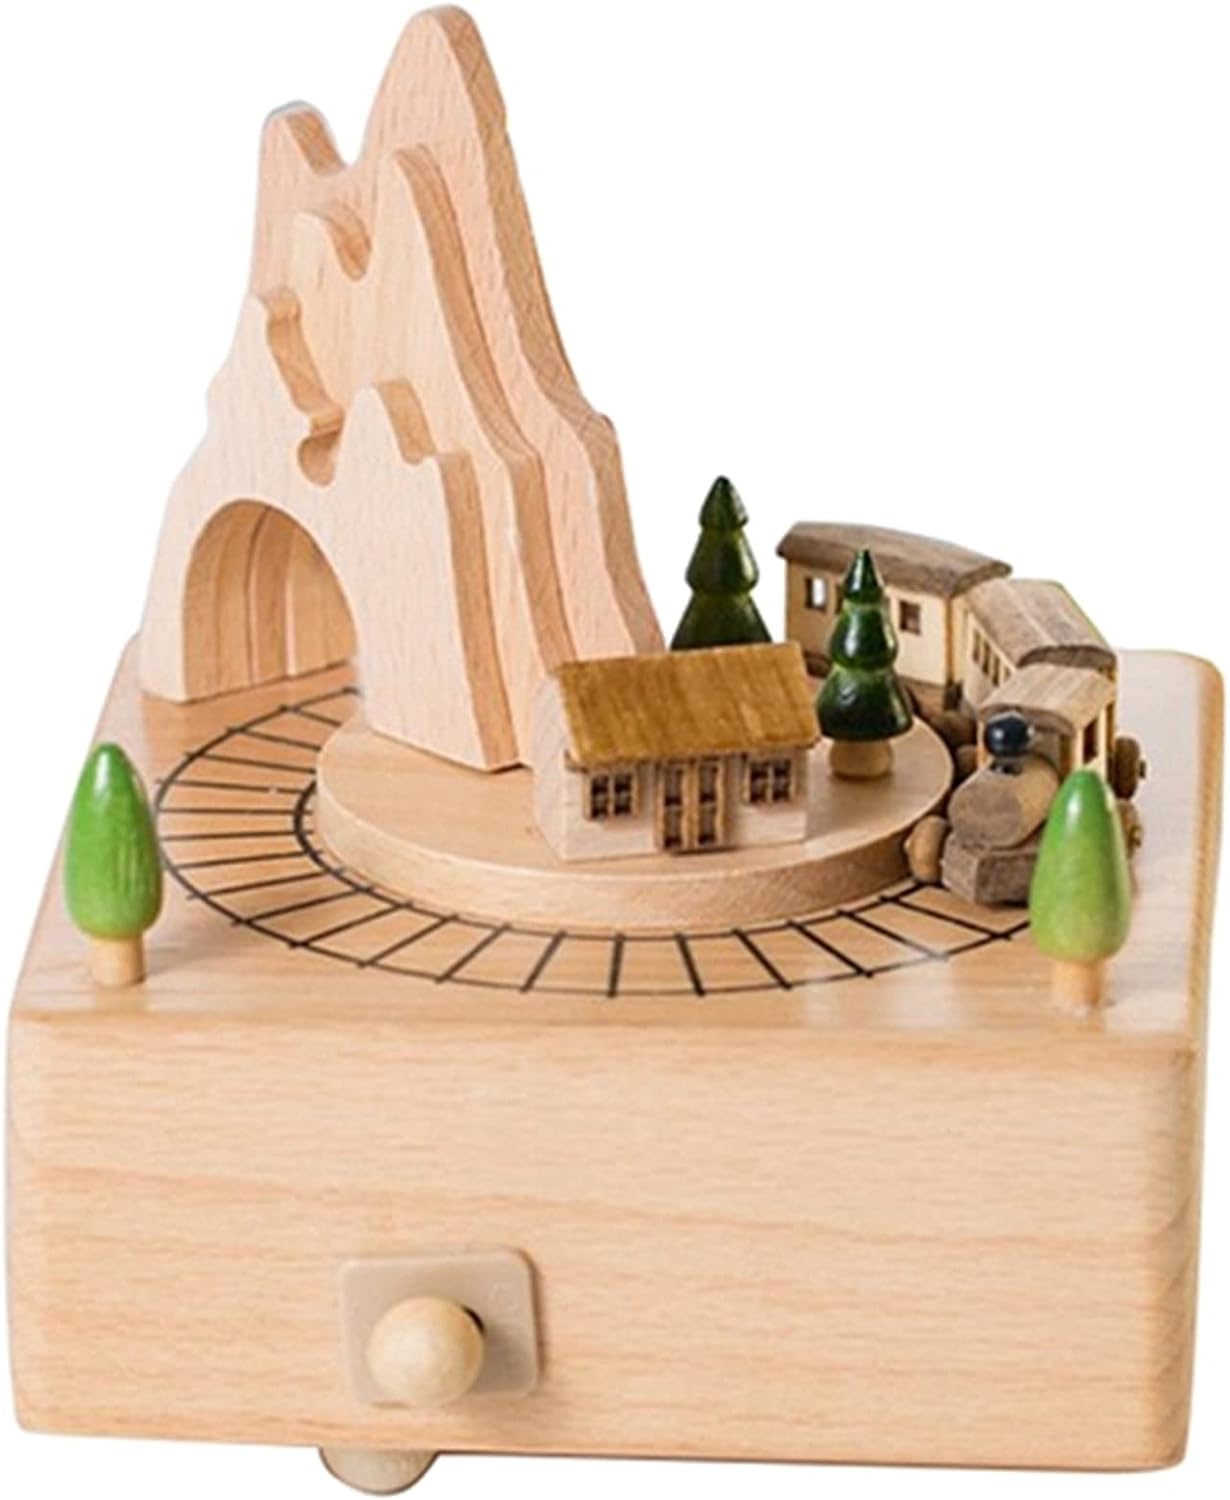 Wooden Music Box - Mountain Tunnel 小火車穿山谷 - 木製音樂盒